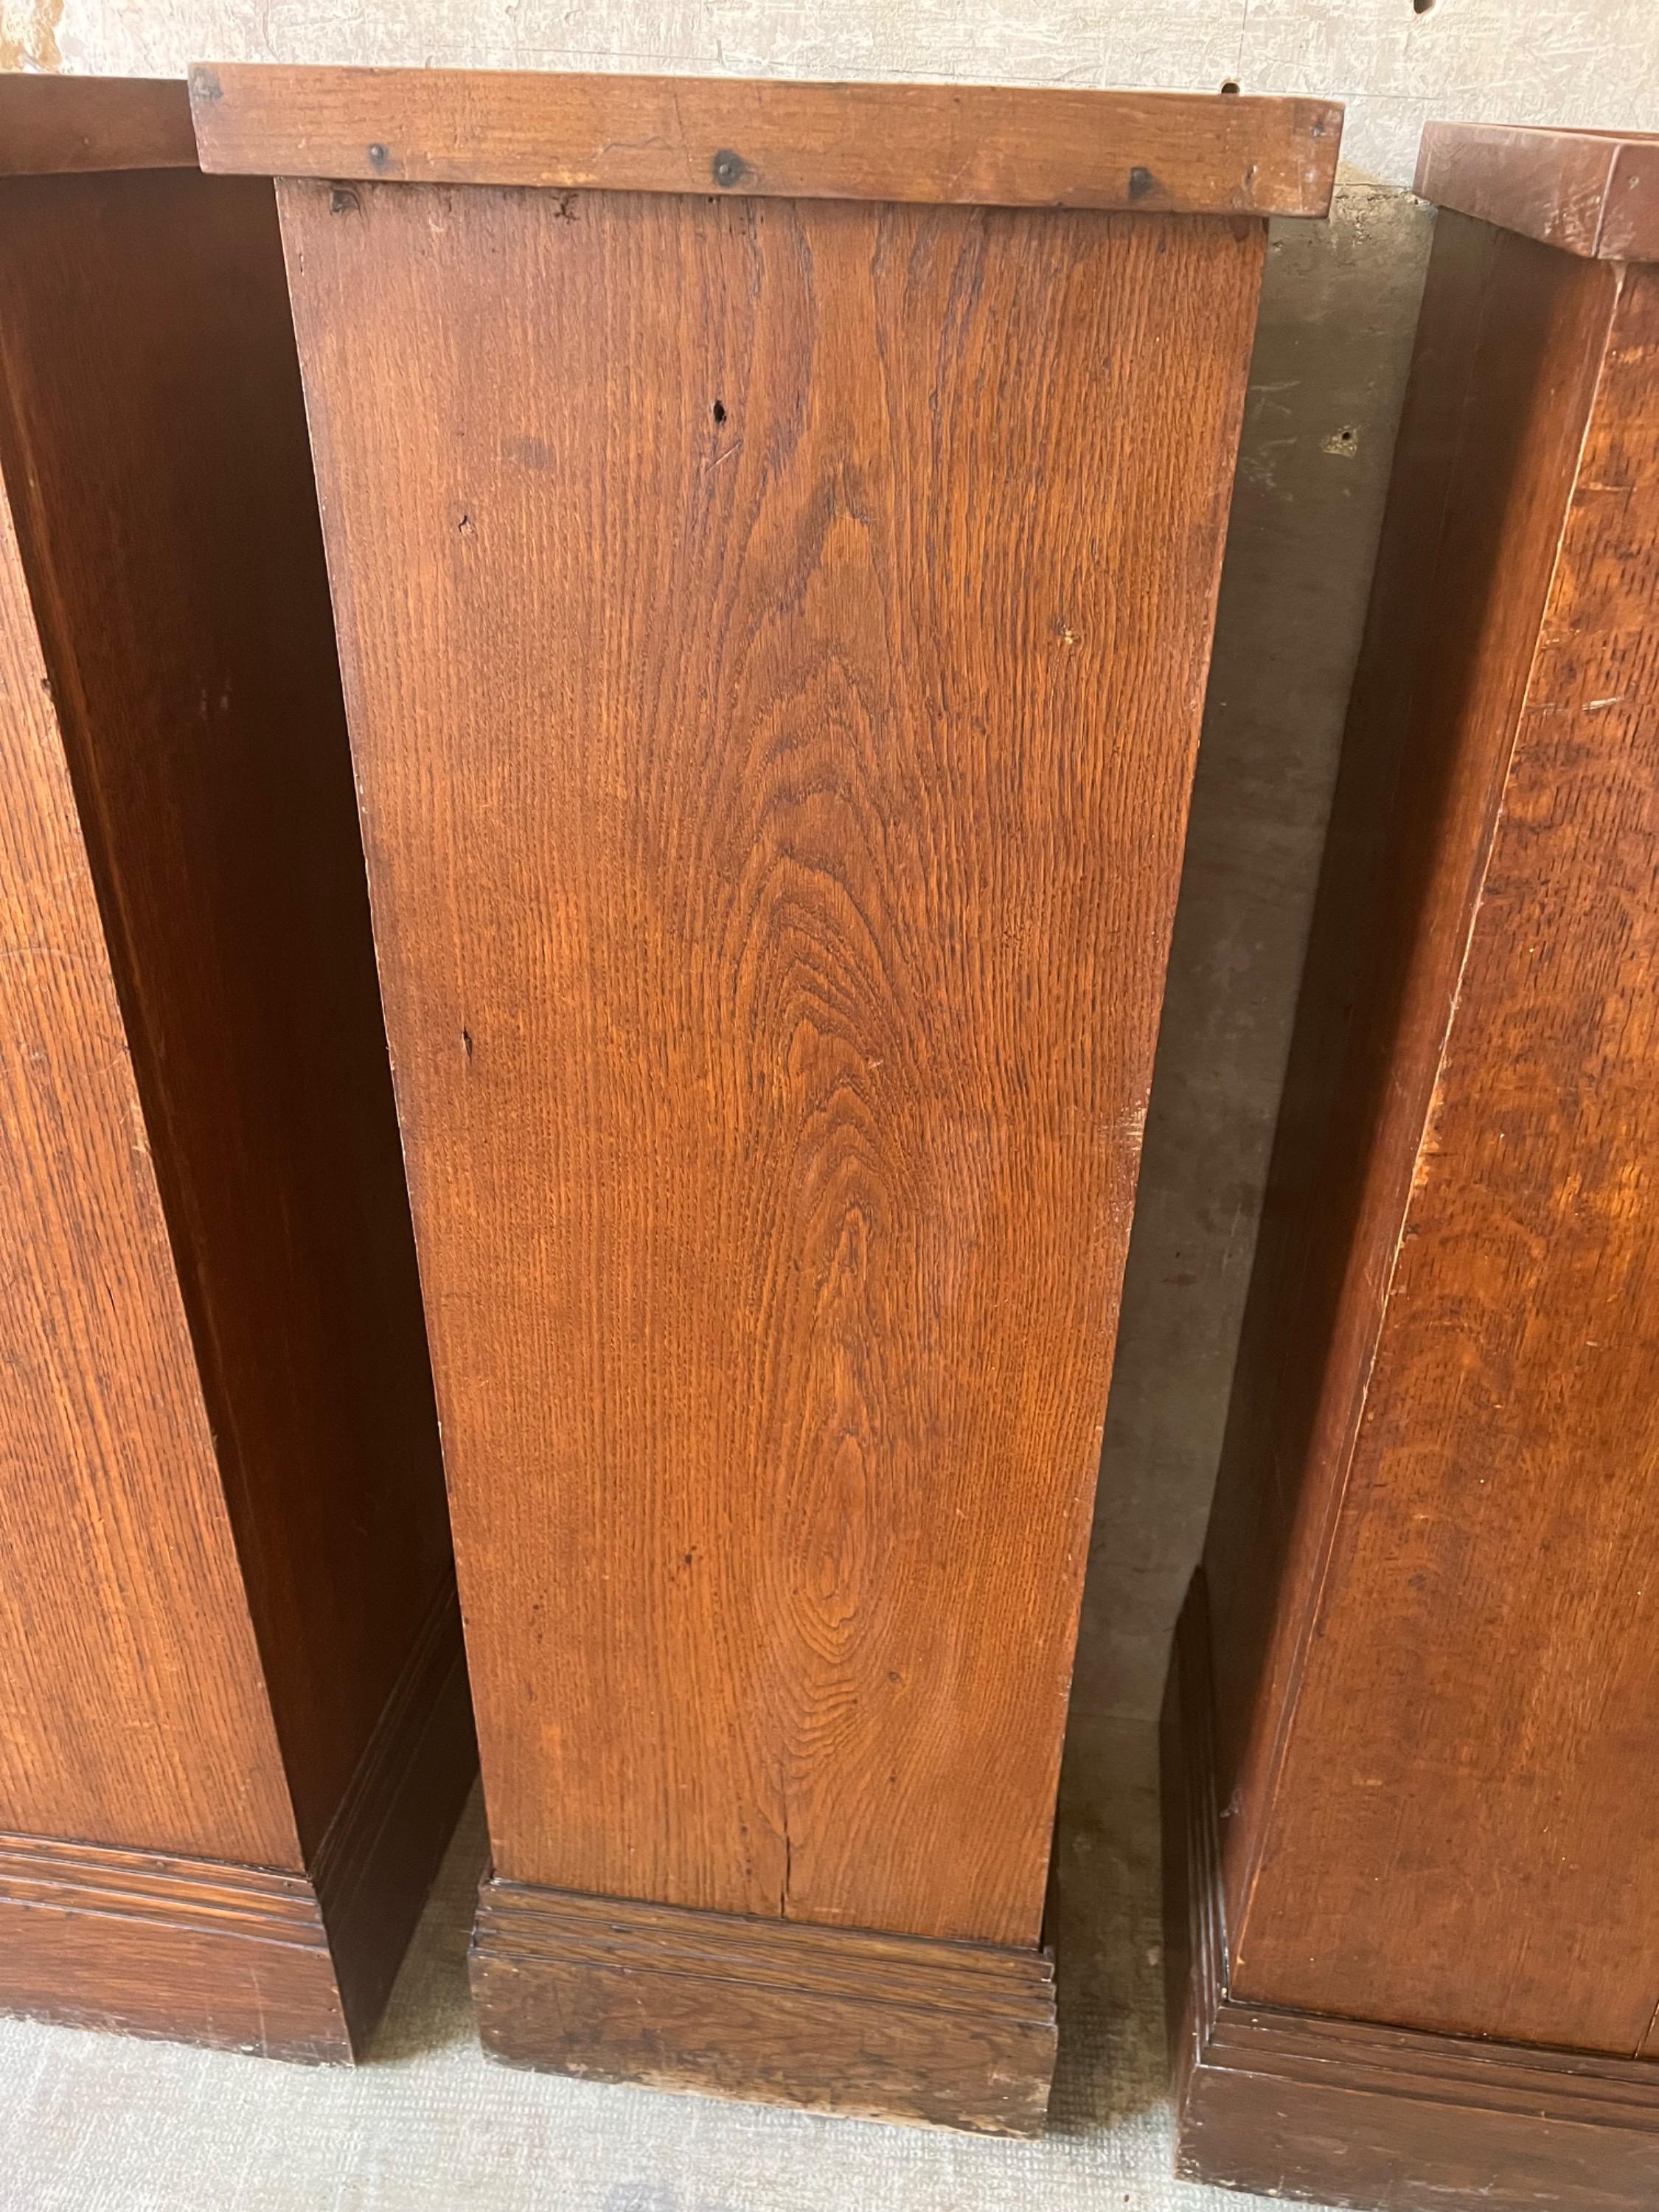 A Set of 3 Big French Pedestals in Solid Oak Wood Circa 1900. Dim Each = 121 x 40 x 40 cm